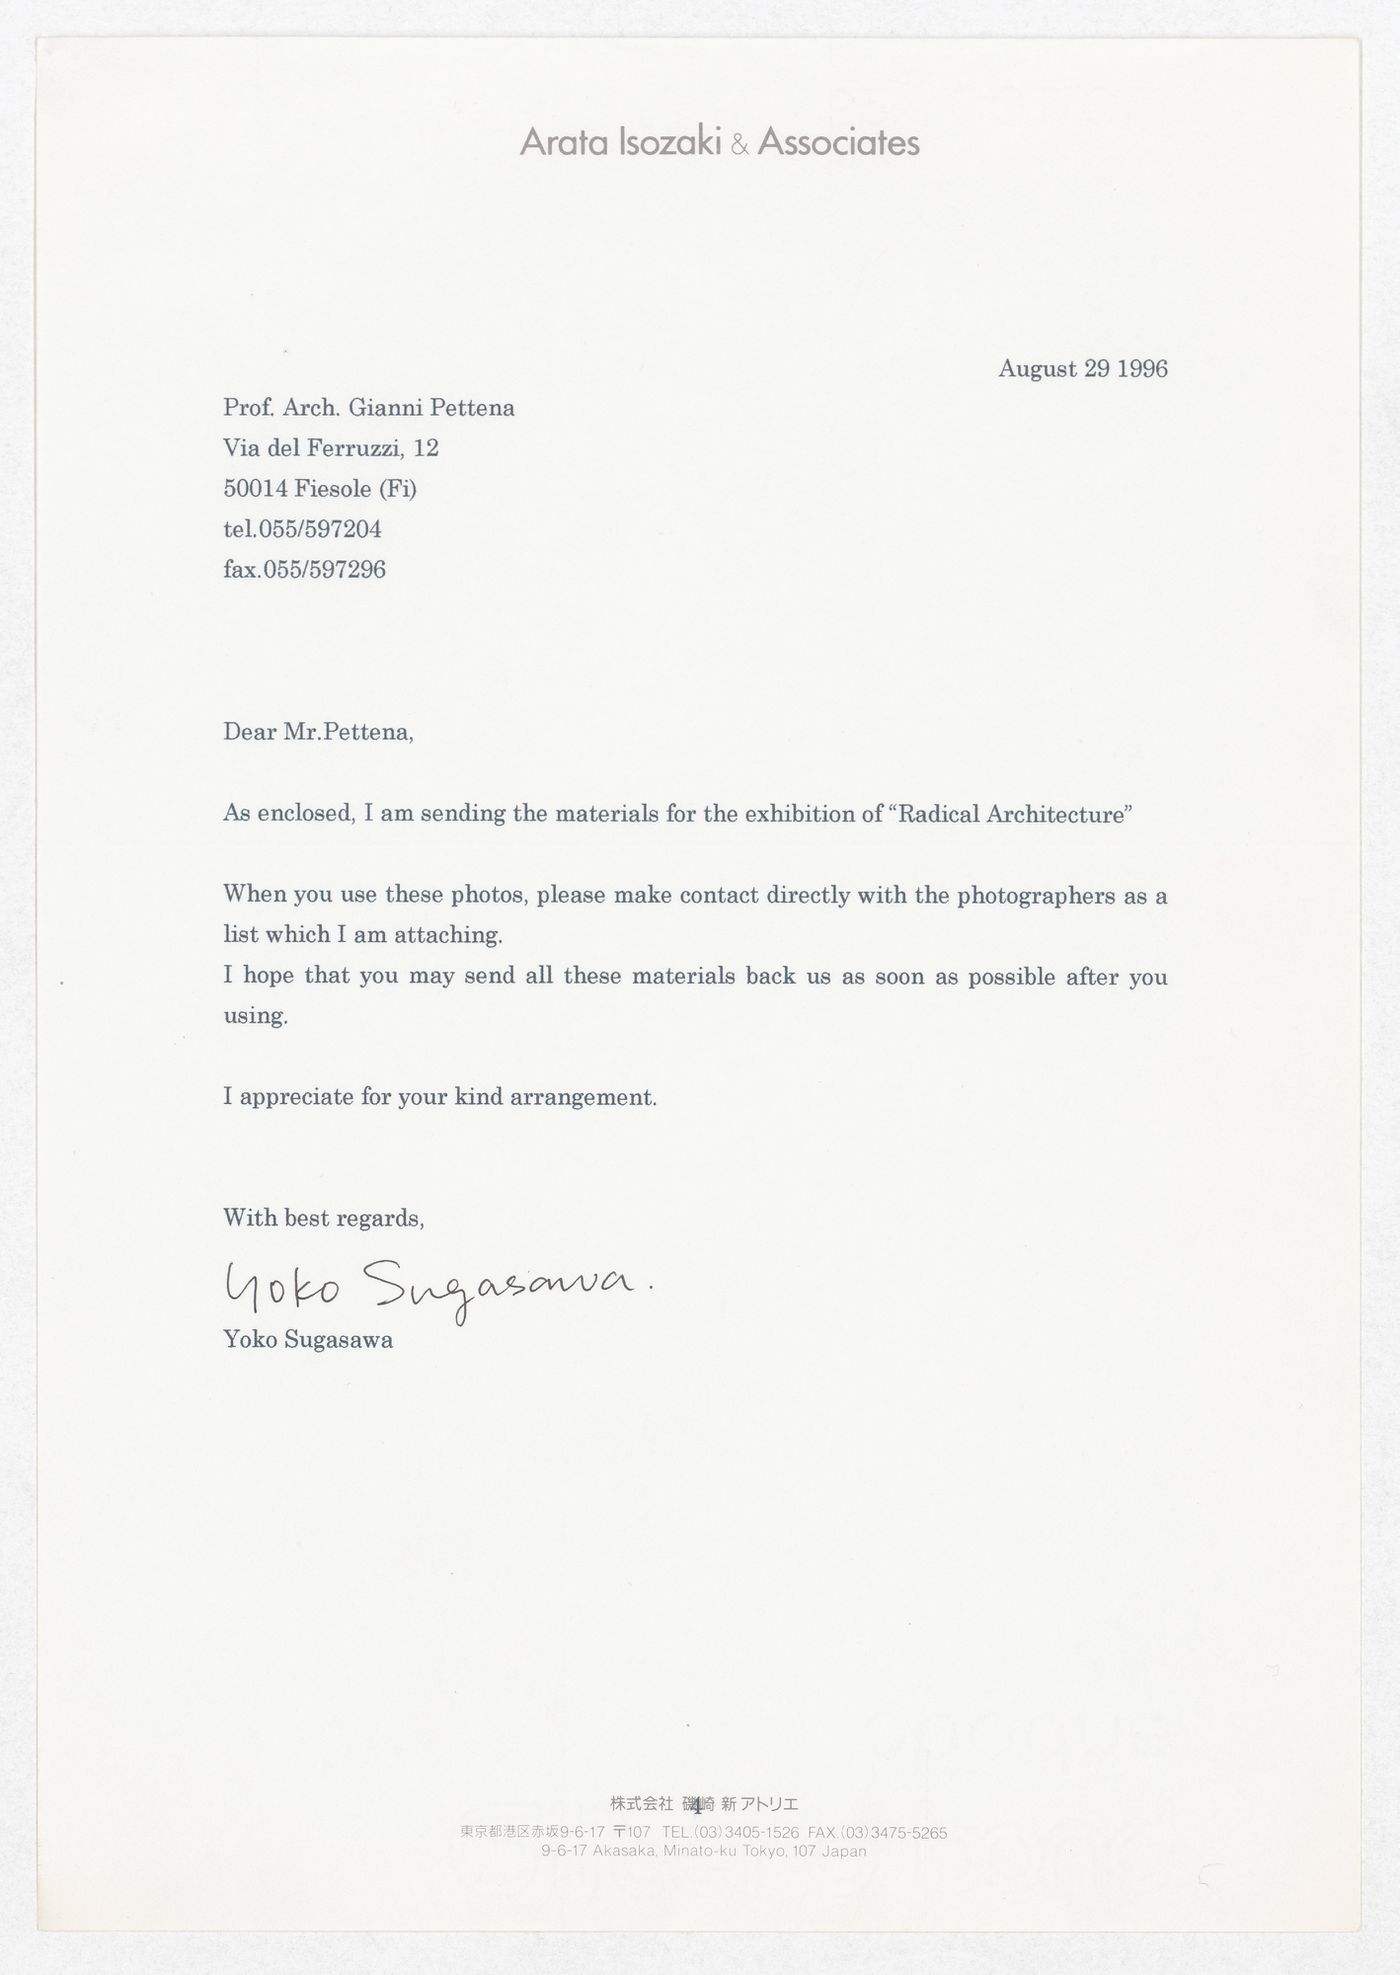 Correspondence and material list from Yoko Sugasawa of Arata Isozaki & Associates for the exhibition Radicals. Architecttura e Design 1960-1975